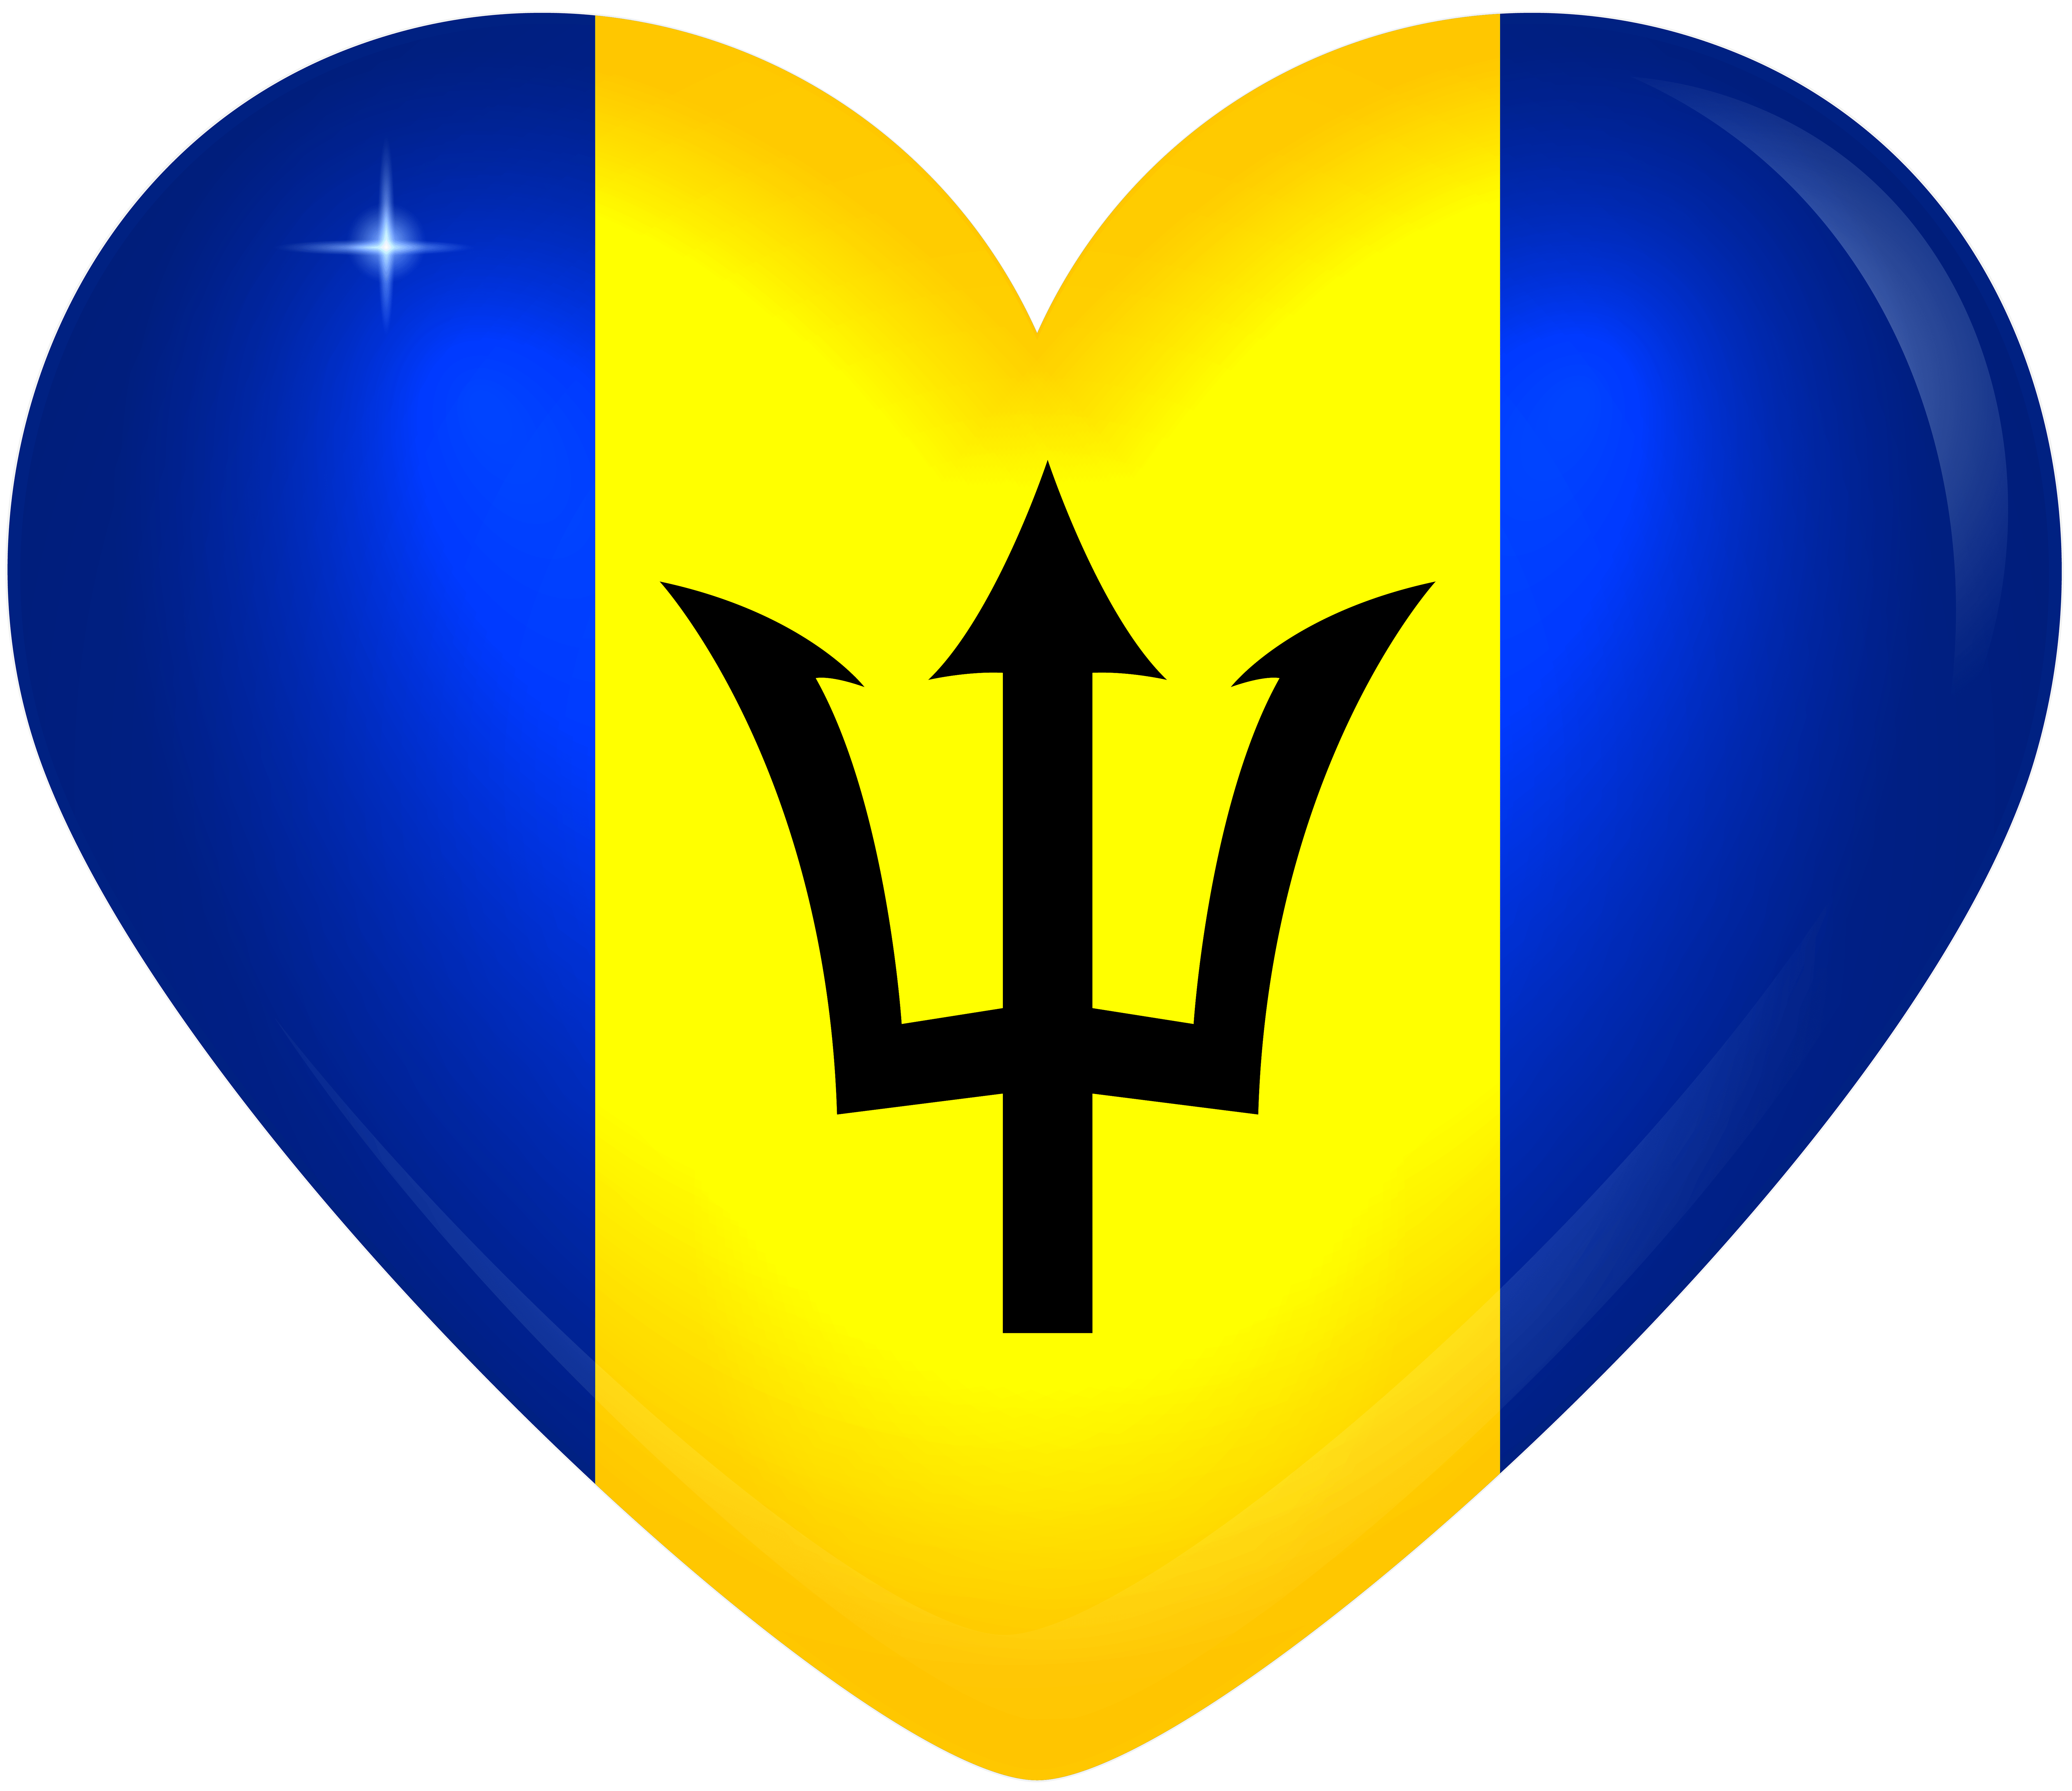 Barbados Large Heart Flag Quality